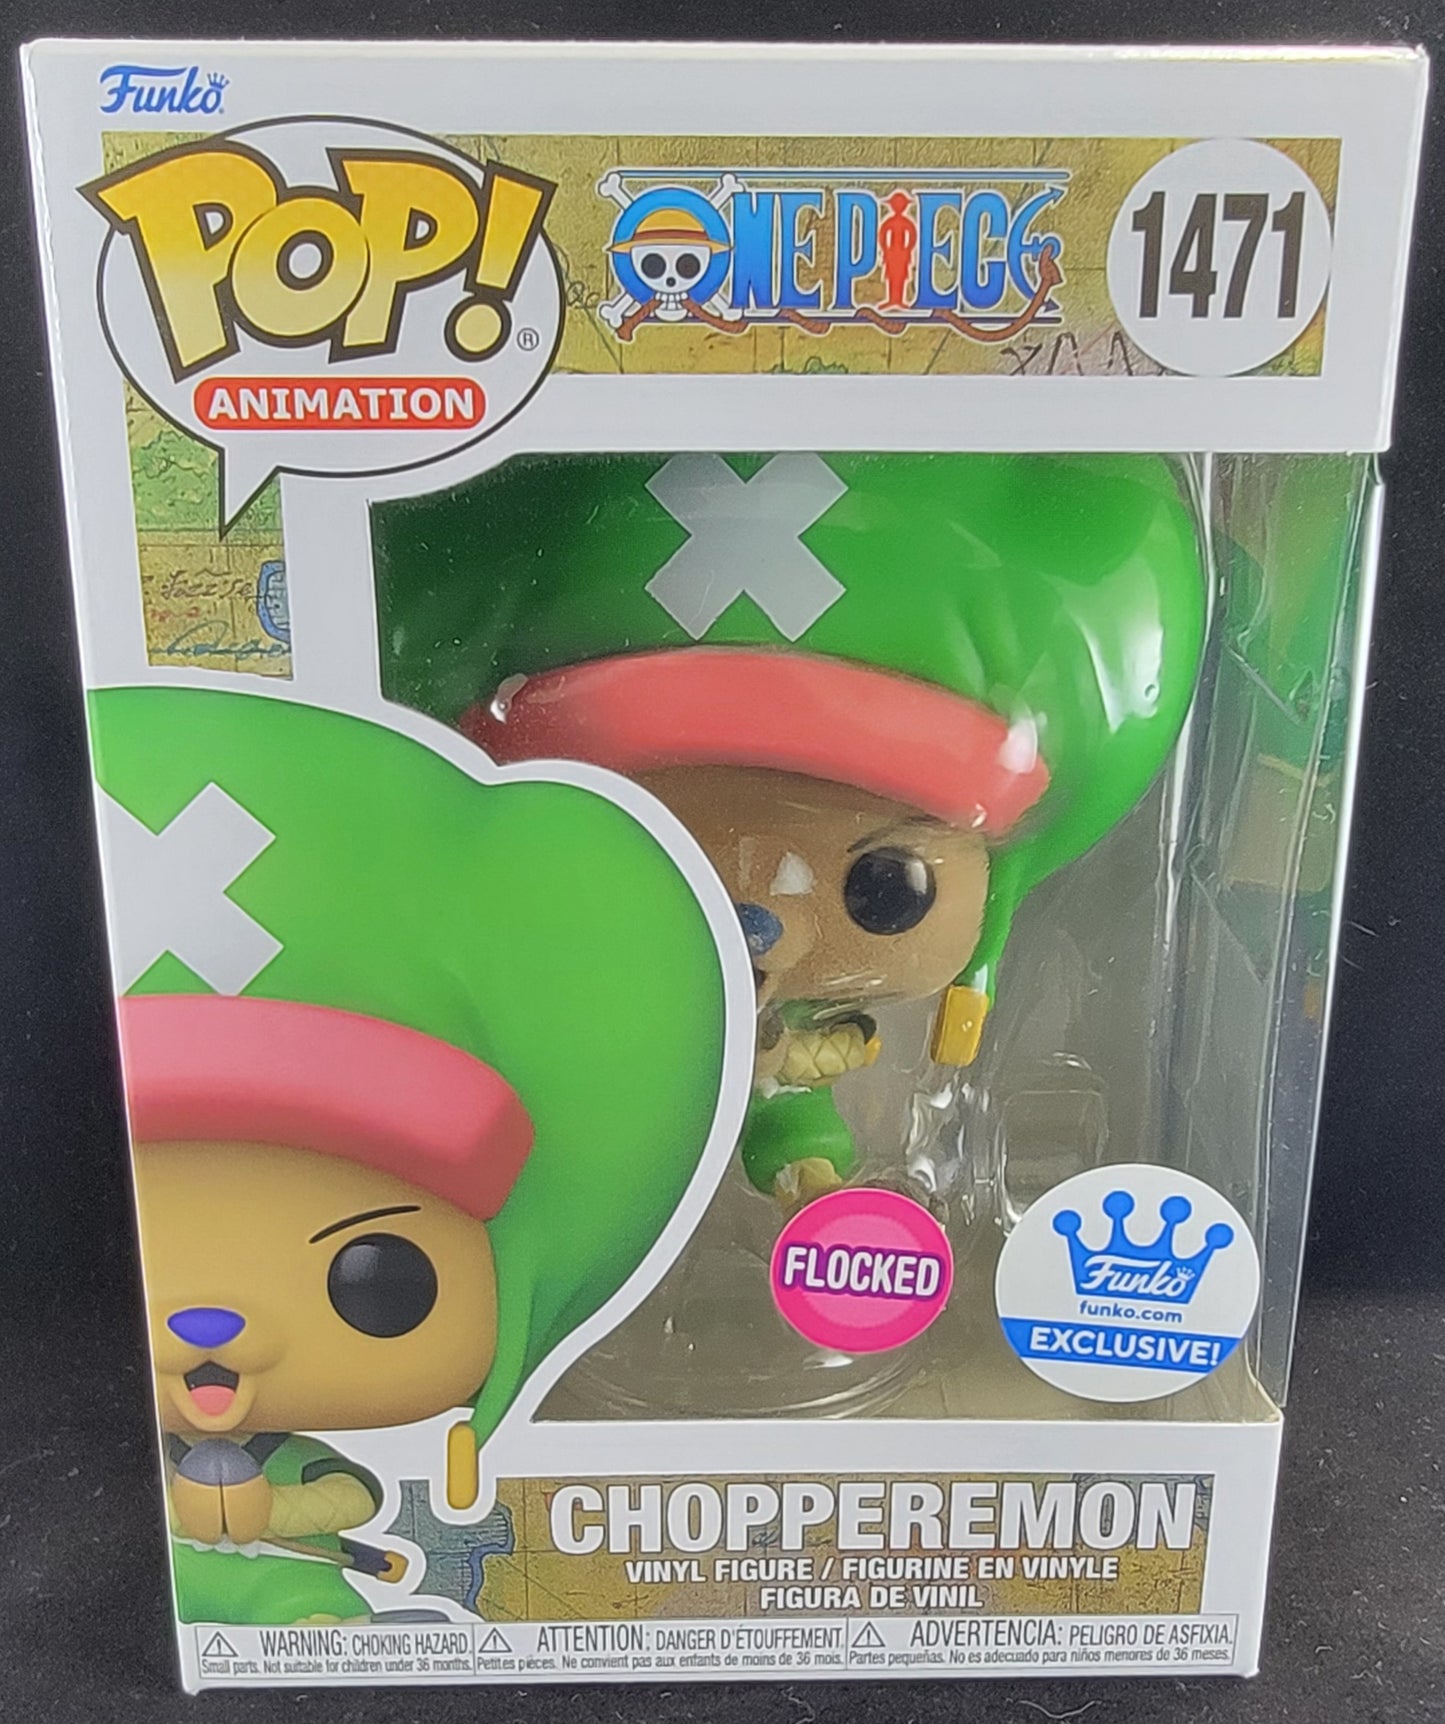 Chopperemon funko exclusive # 1471 (nib)
With pop protector